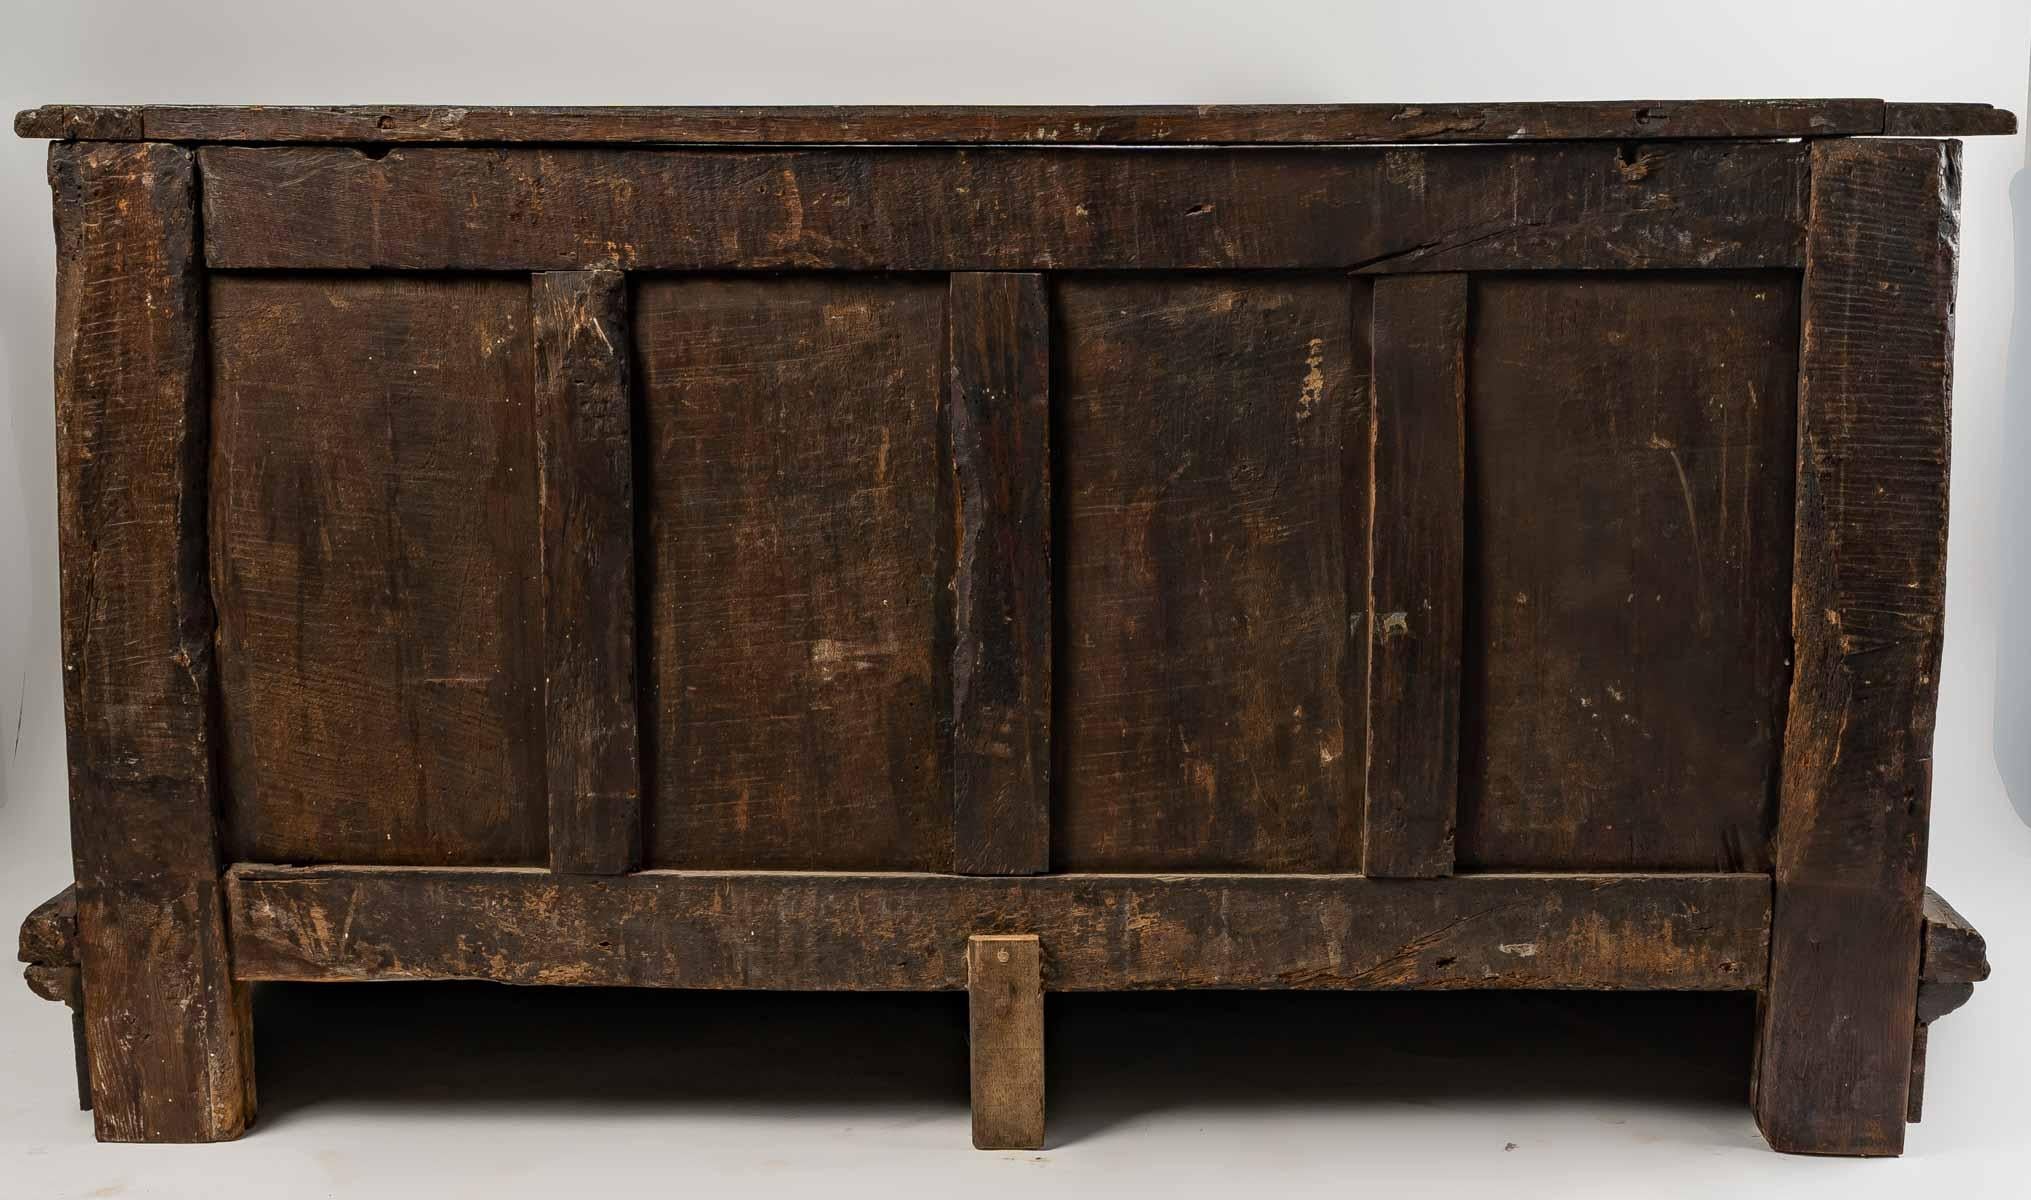 17th century chest, oak, opening on the top and door on the front door.
Measures: H: 78 cm, W: 144 cm, D: 63 cm.